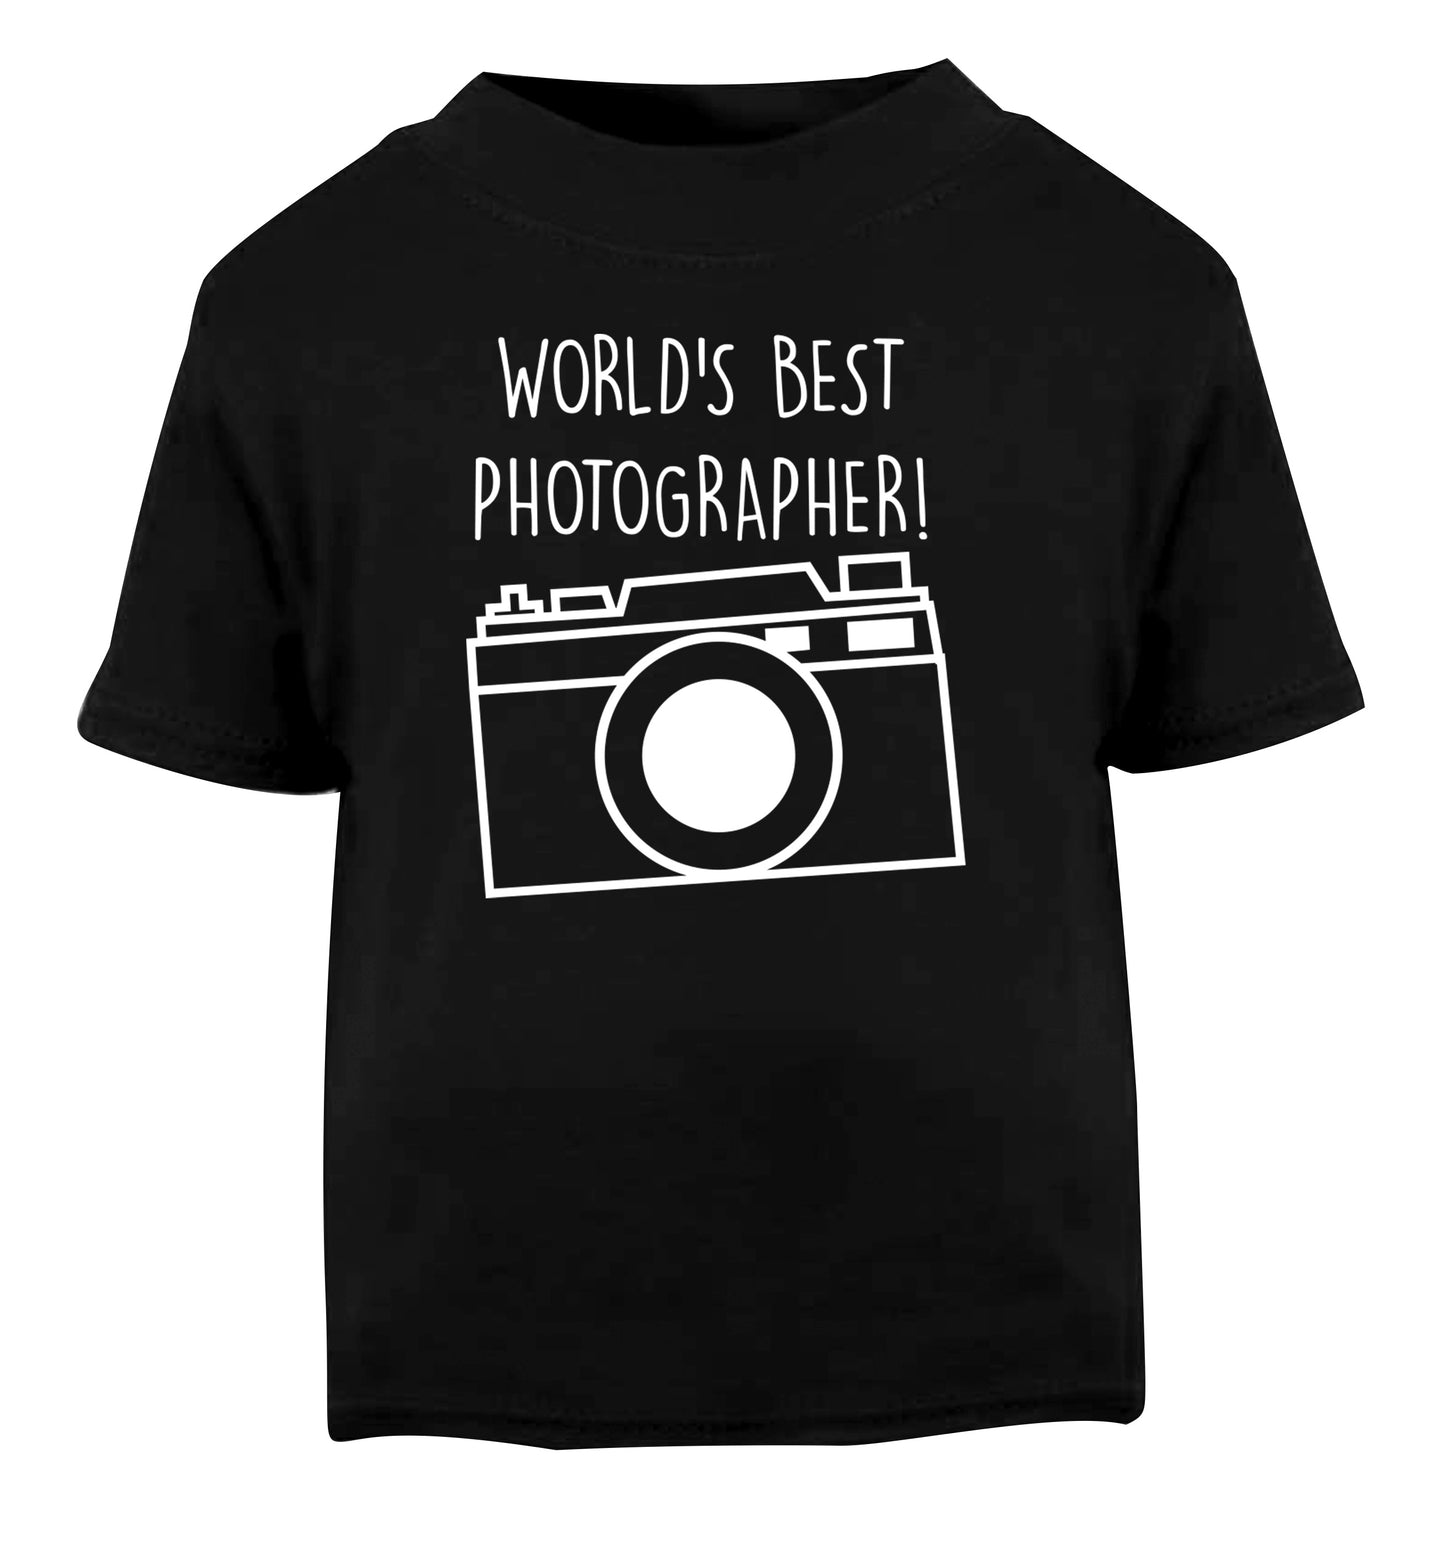 Worlds best photographer  Black Baby Toddler Tshirt 2 years